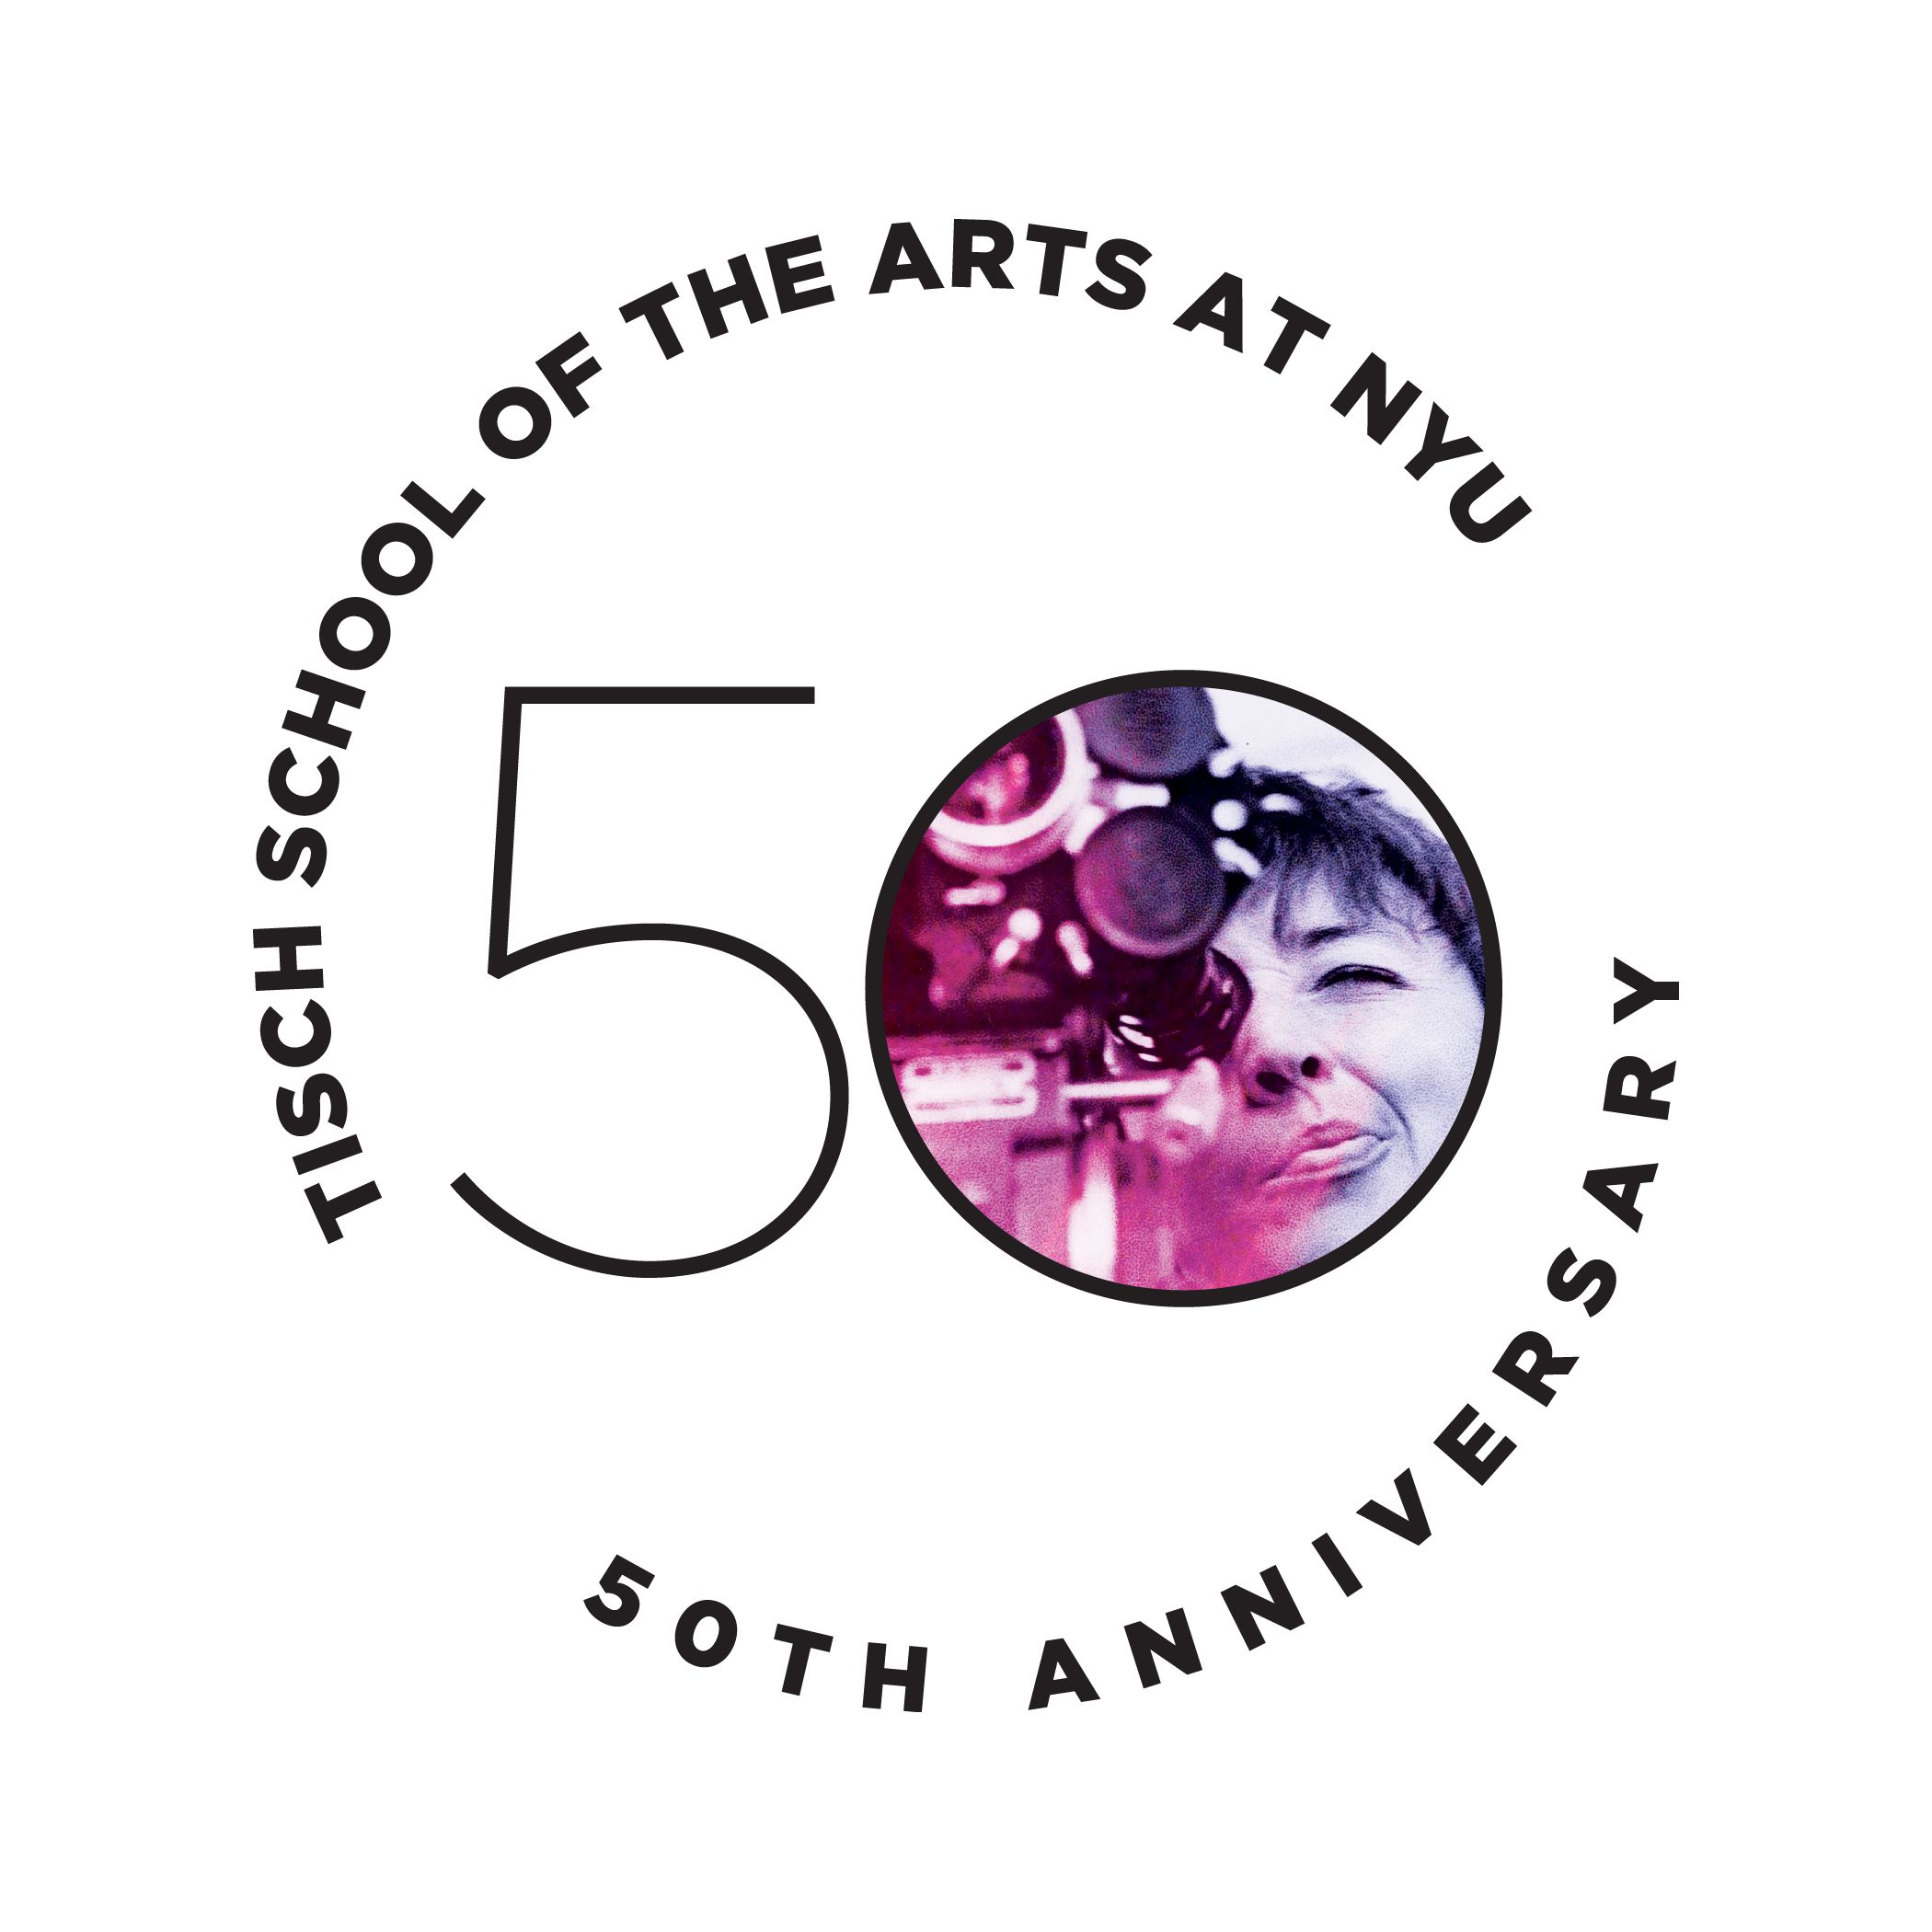 50th Anniversary Logo